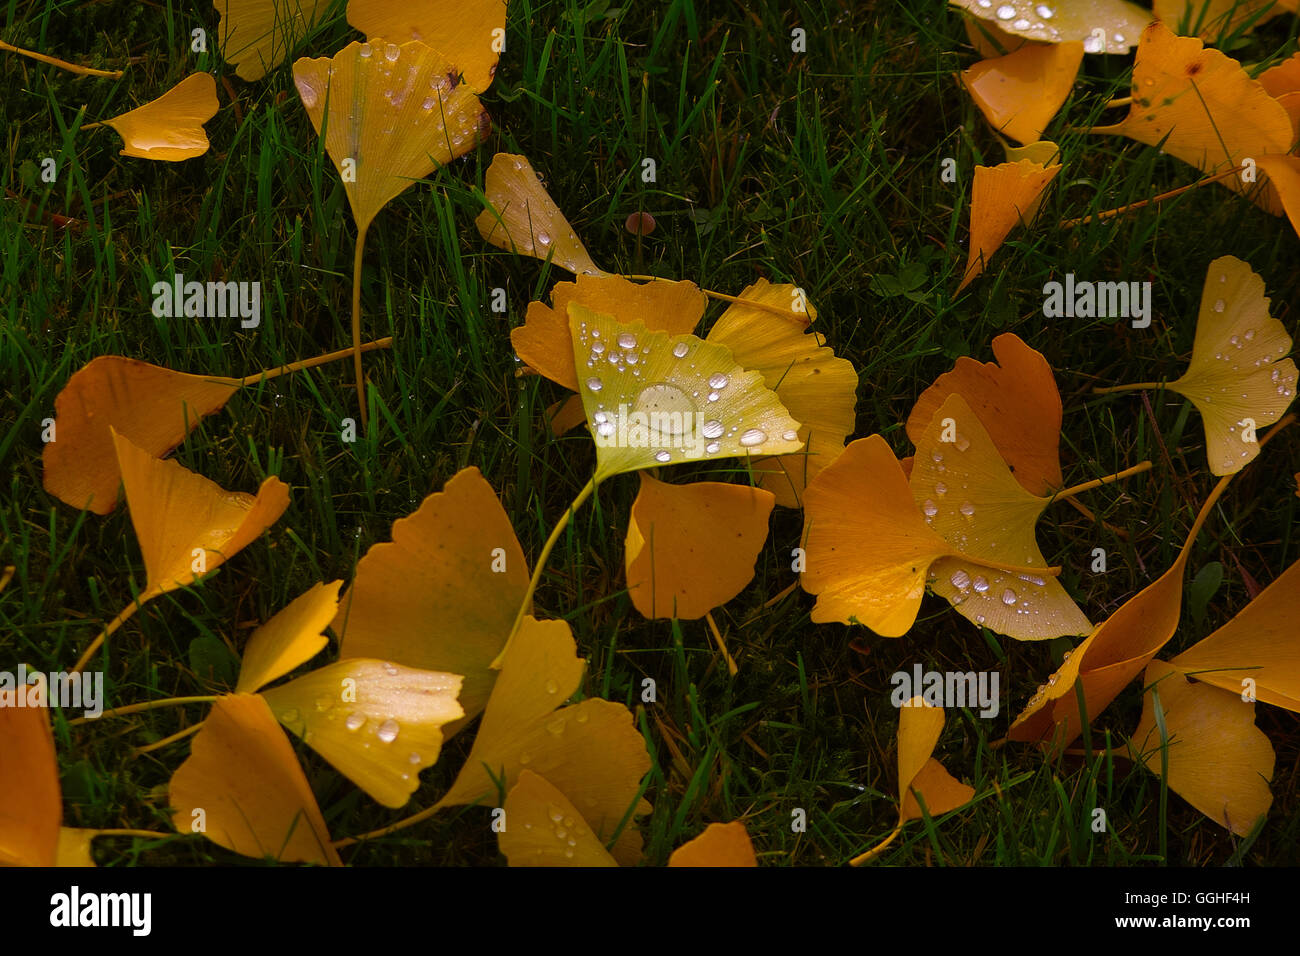 Gingko gingko hojas de otoño con gotas de lluvia / mit regentropfen herbstlaub des Ginkgo (Gingko biloba) Foto de stock